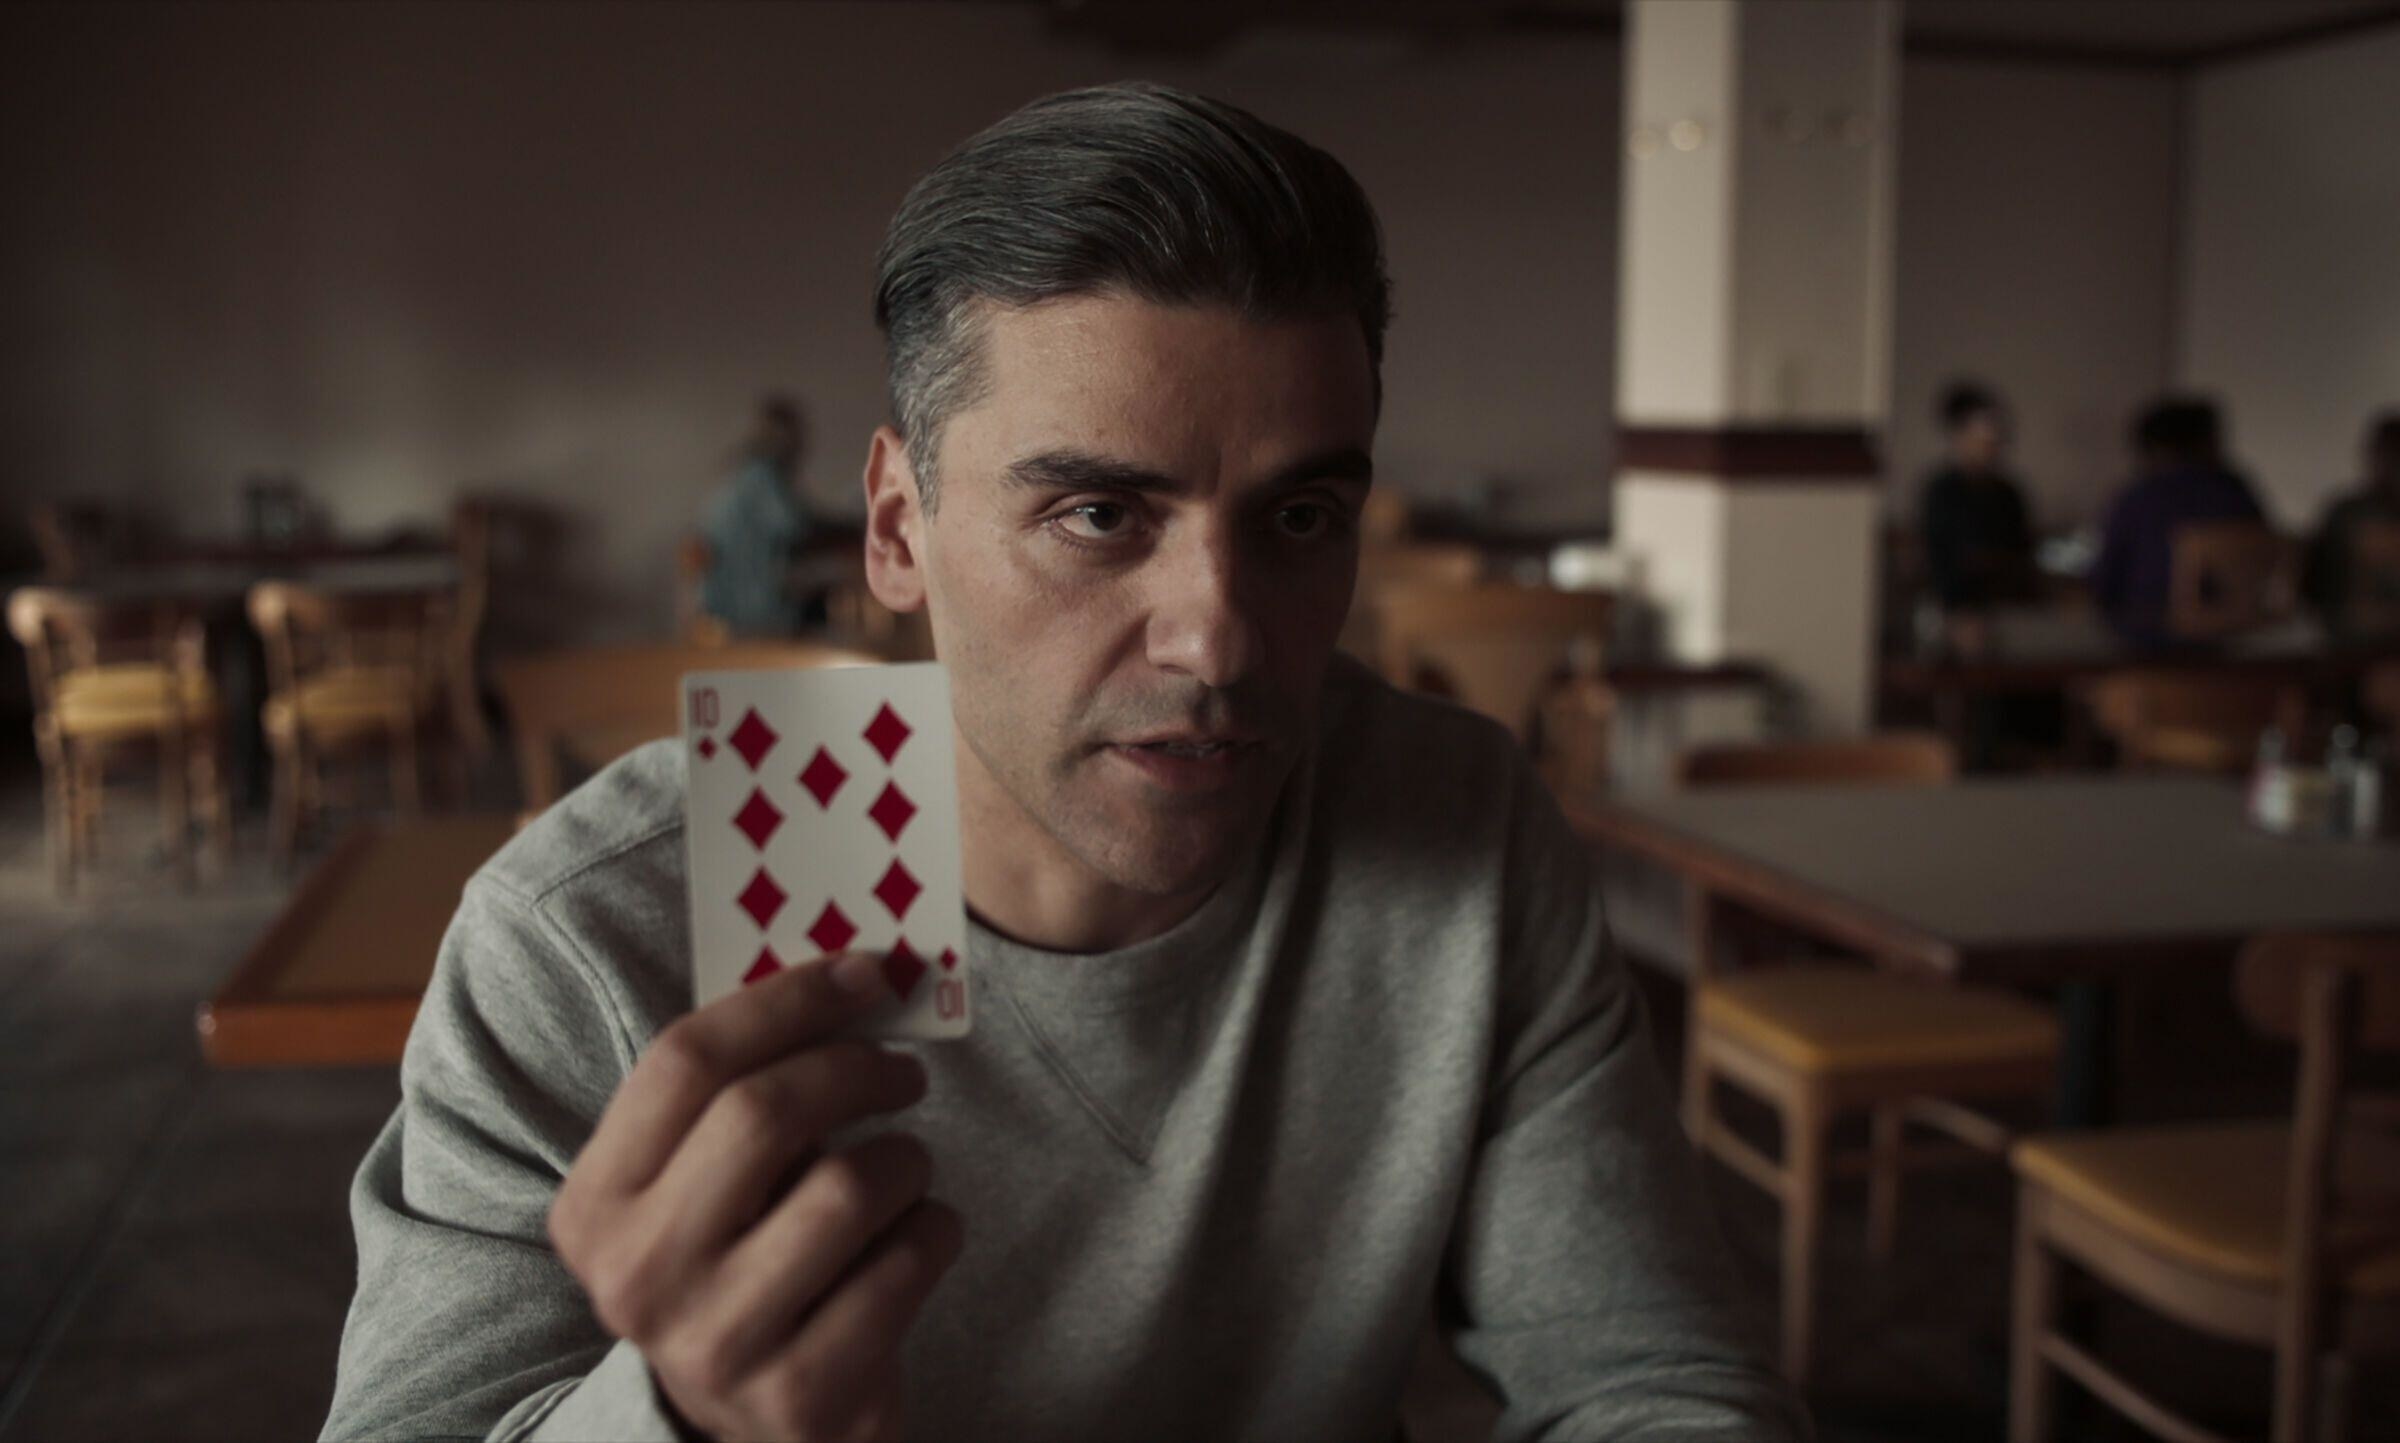 oscar isaac holding up a playing card